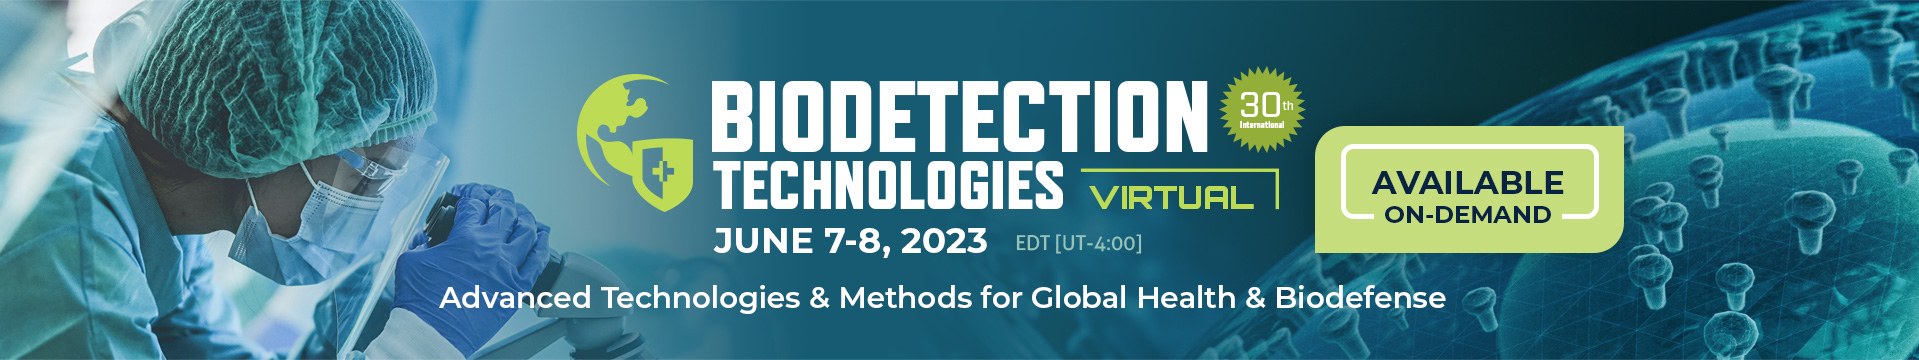 Biodetection Technologies 2022